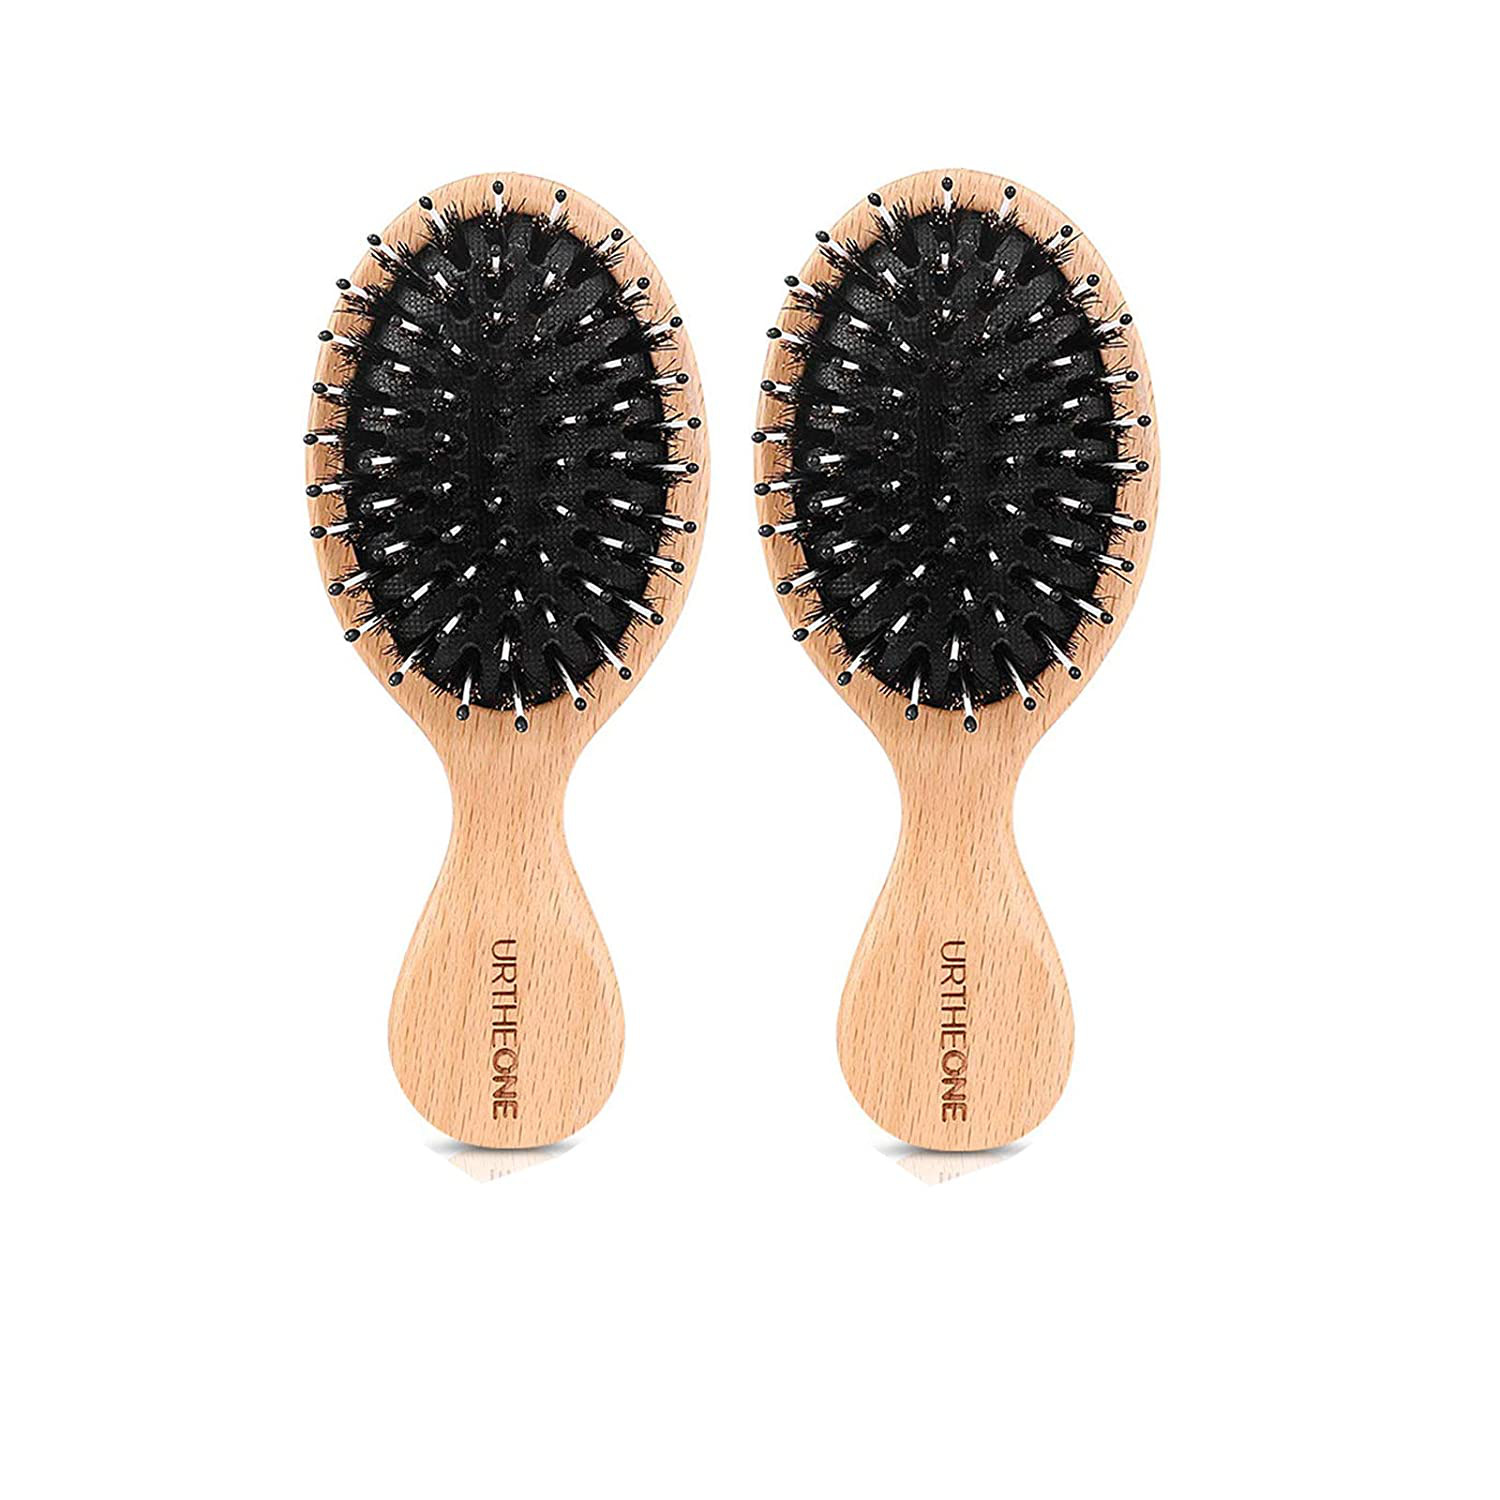 thinkstar 2Pcs Hair Brush Mini Boar Bristle Hairbrush For Thick Curly Thin Long Short Wet